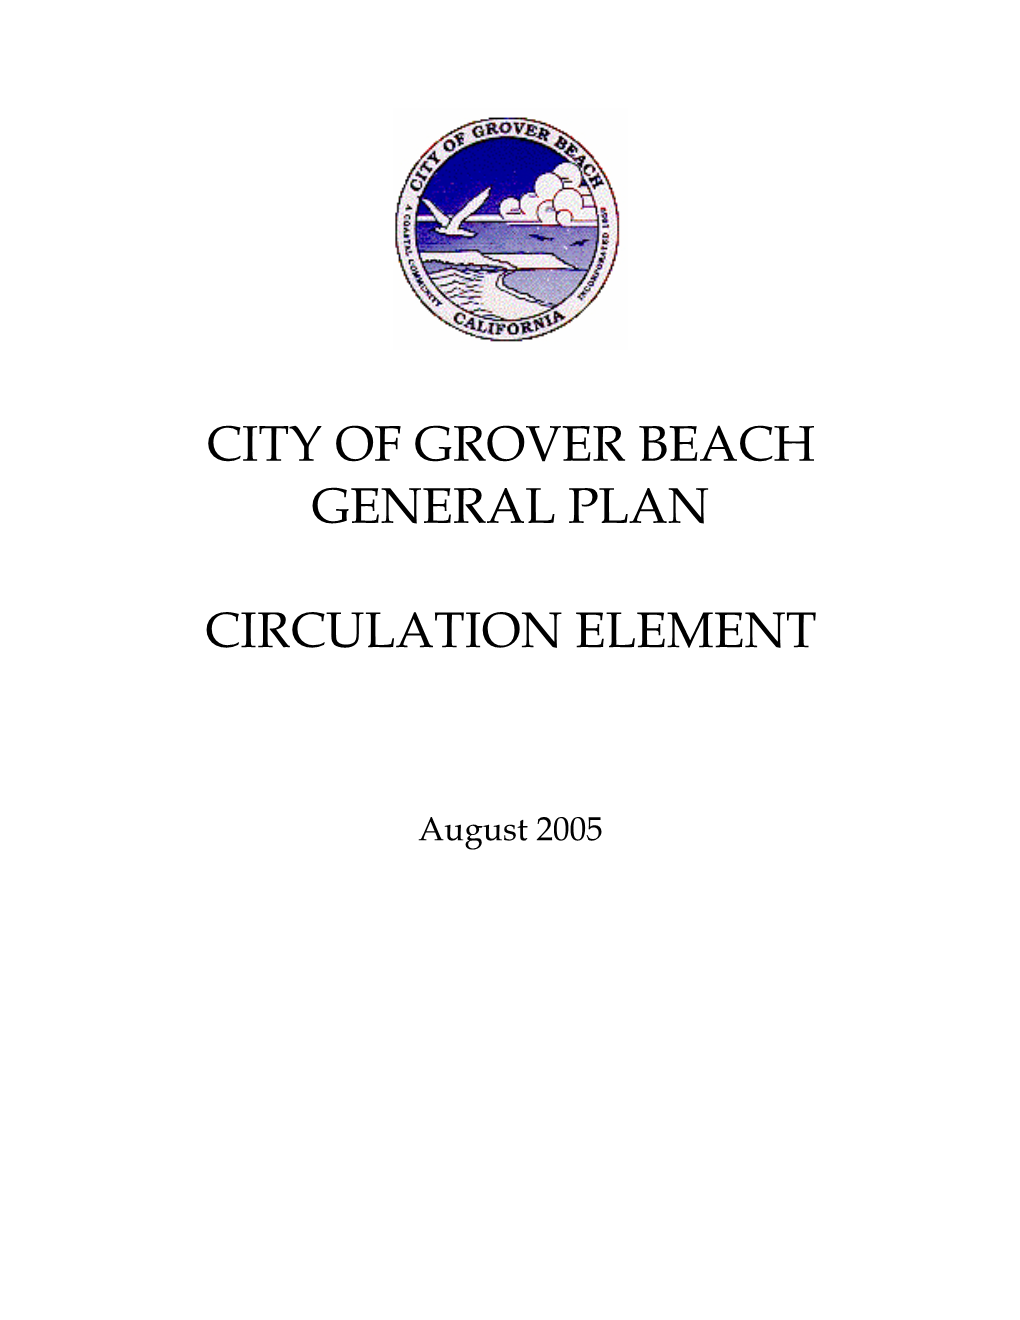 City of Grover Beach General Plan Circulation Element